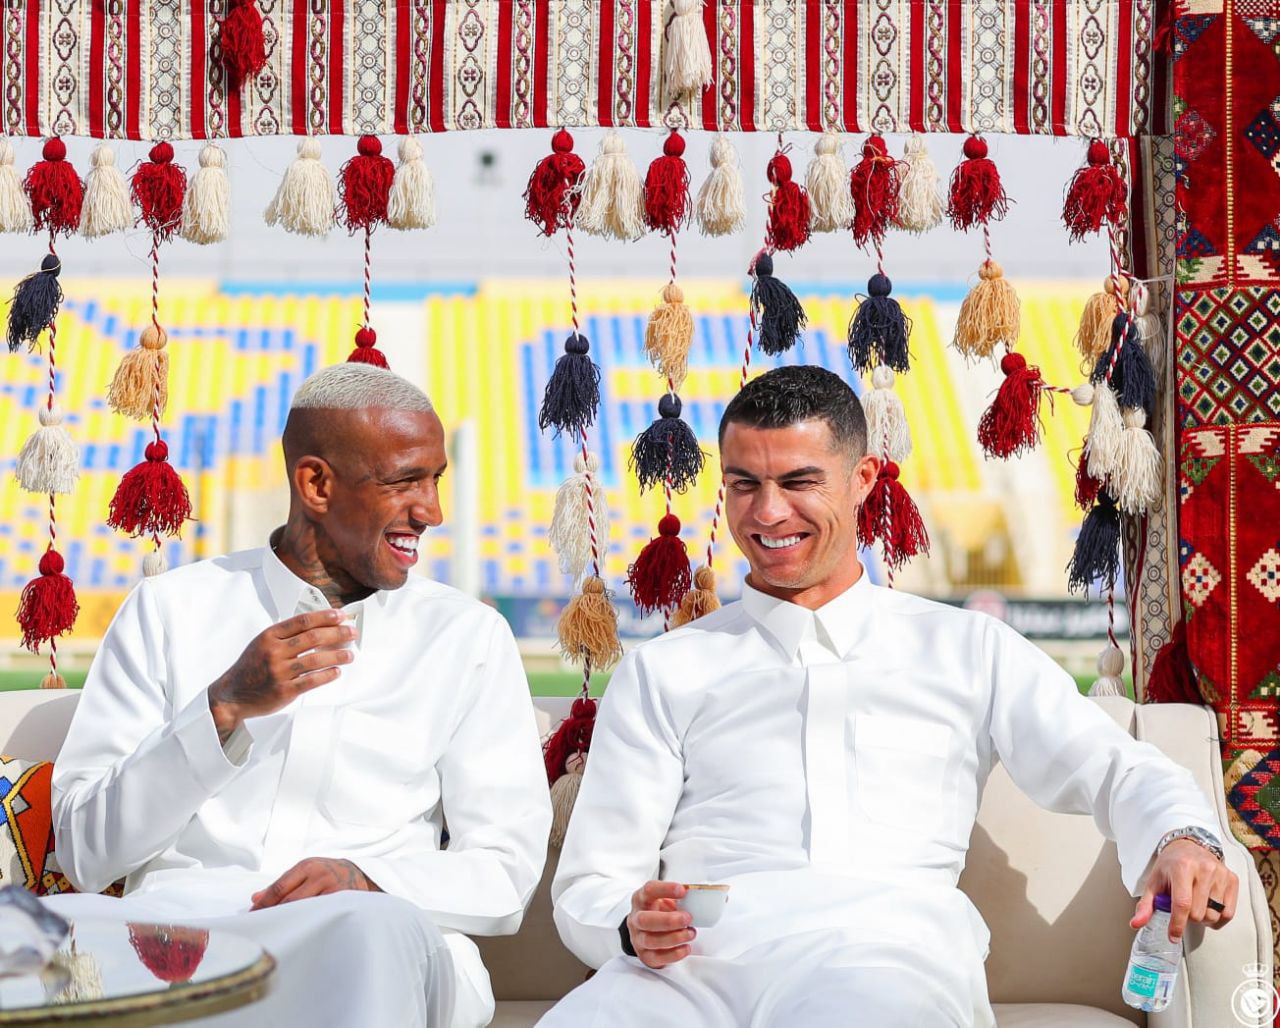 Ronaldo in Saudi uniform celebrates foundation day with victory